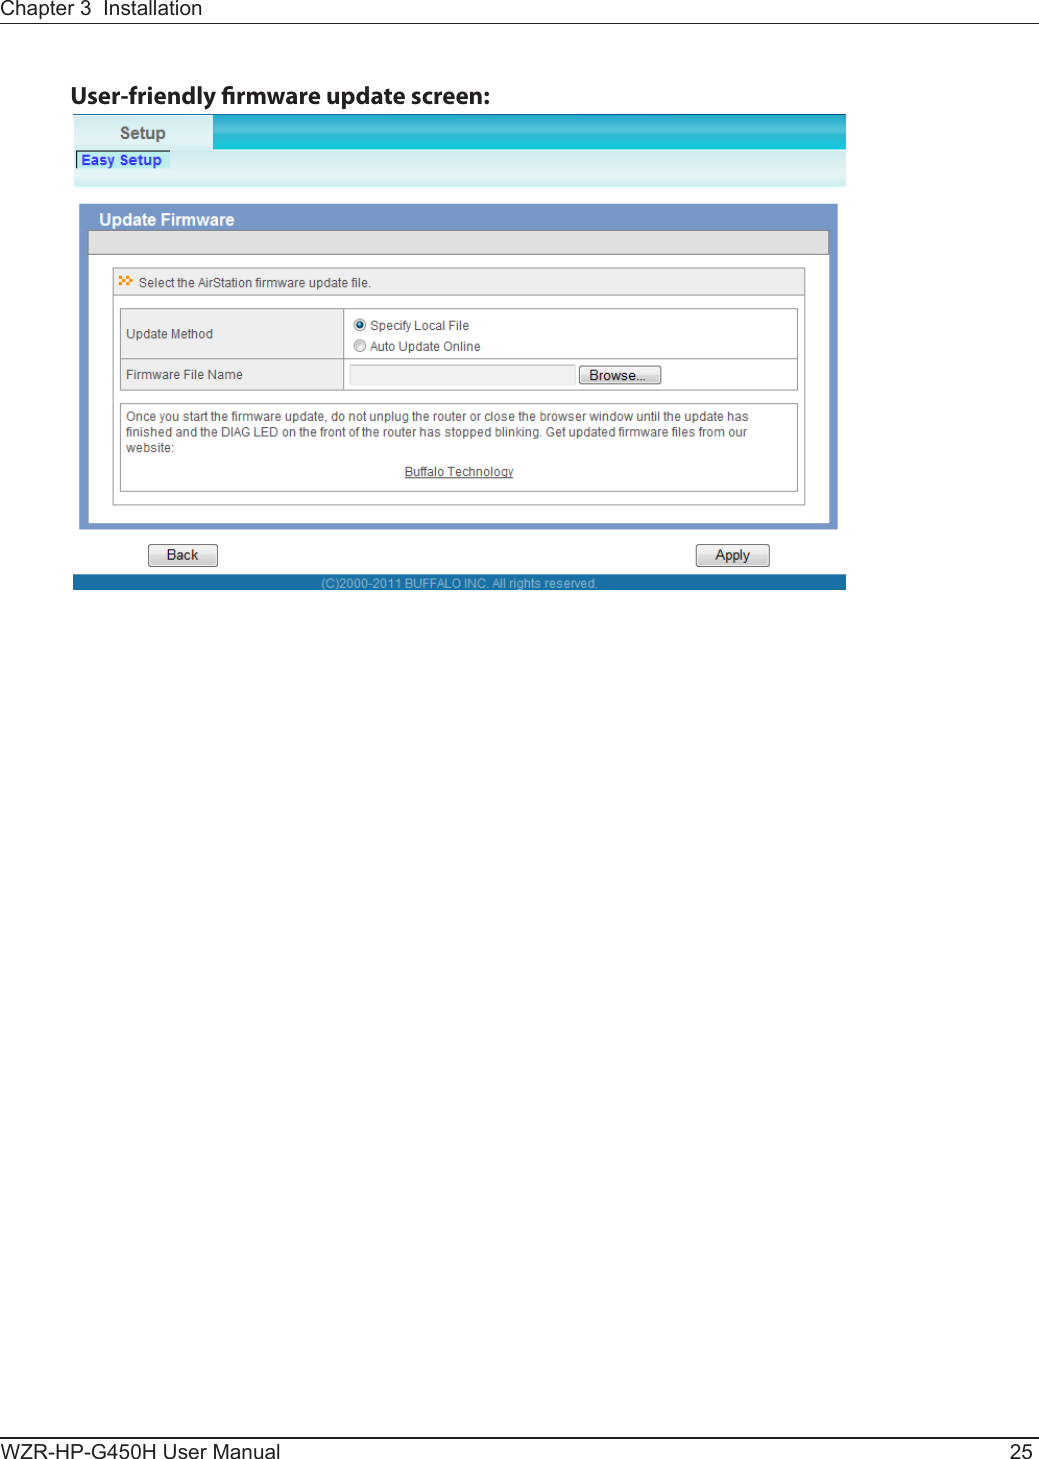 Chapter 3  InstallationWZR-HP-G450H User Manual 25User-friendly rmware update screen: